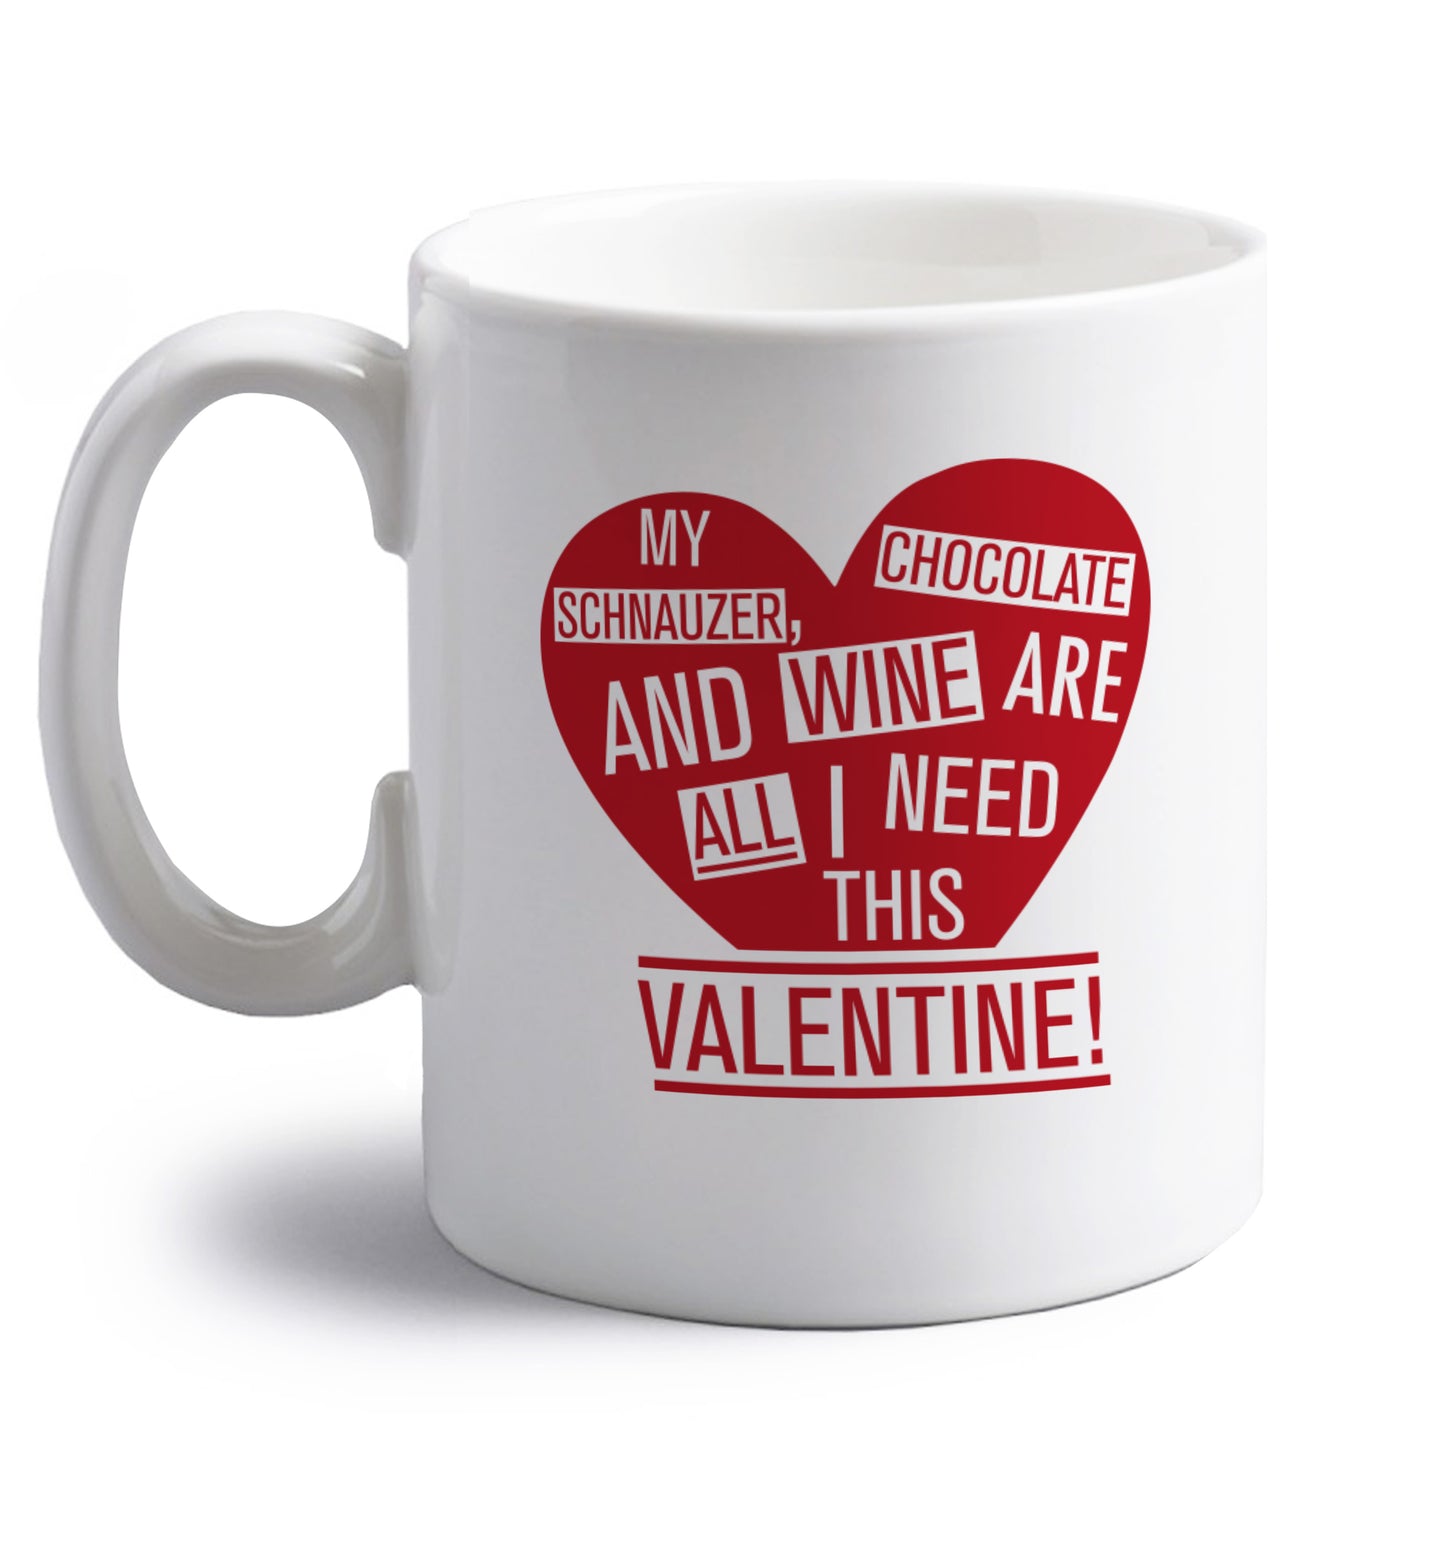 My schnauzer, chocolate and wine are all I need this valentine! right handed white ceramic mug 